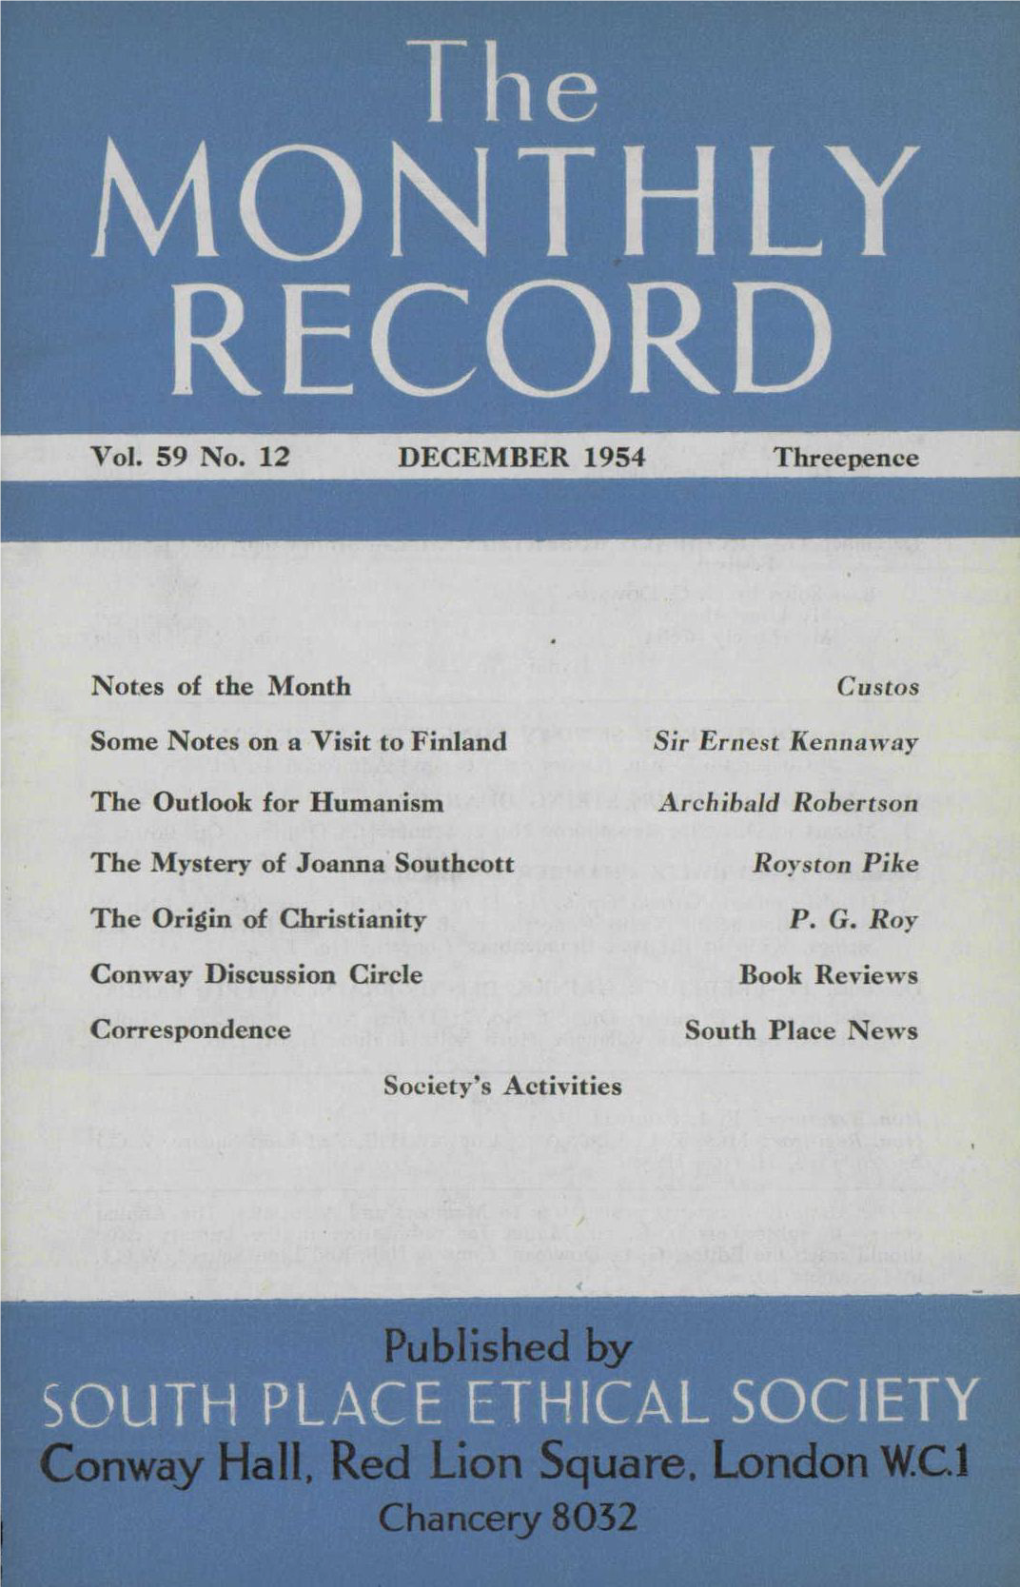 Vol. 59 No. 12 DECEMBER 1954 Threepence Notes